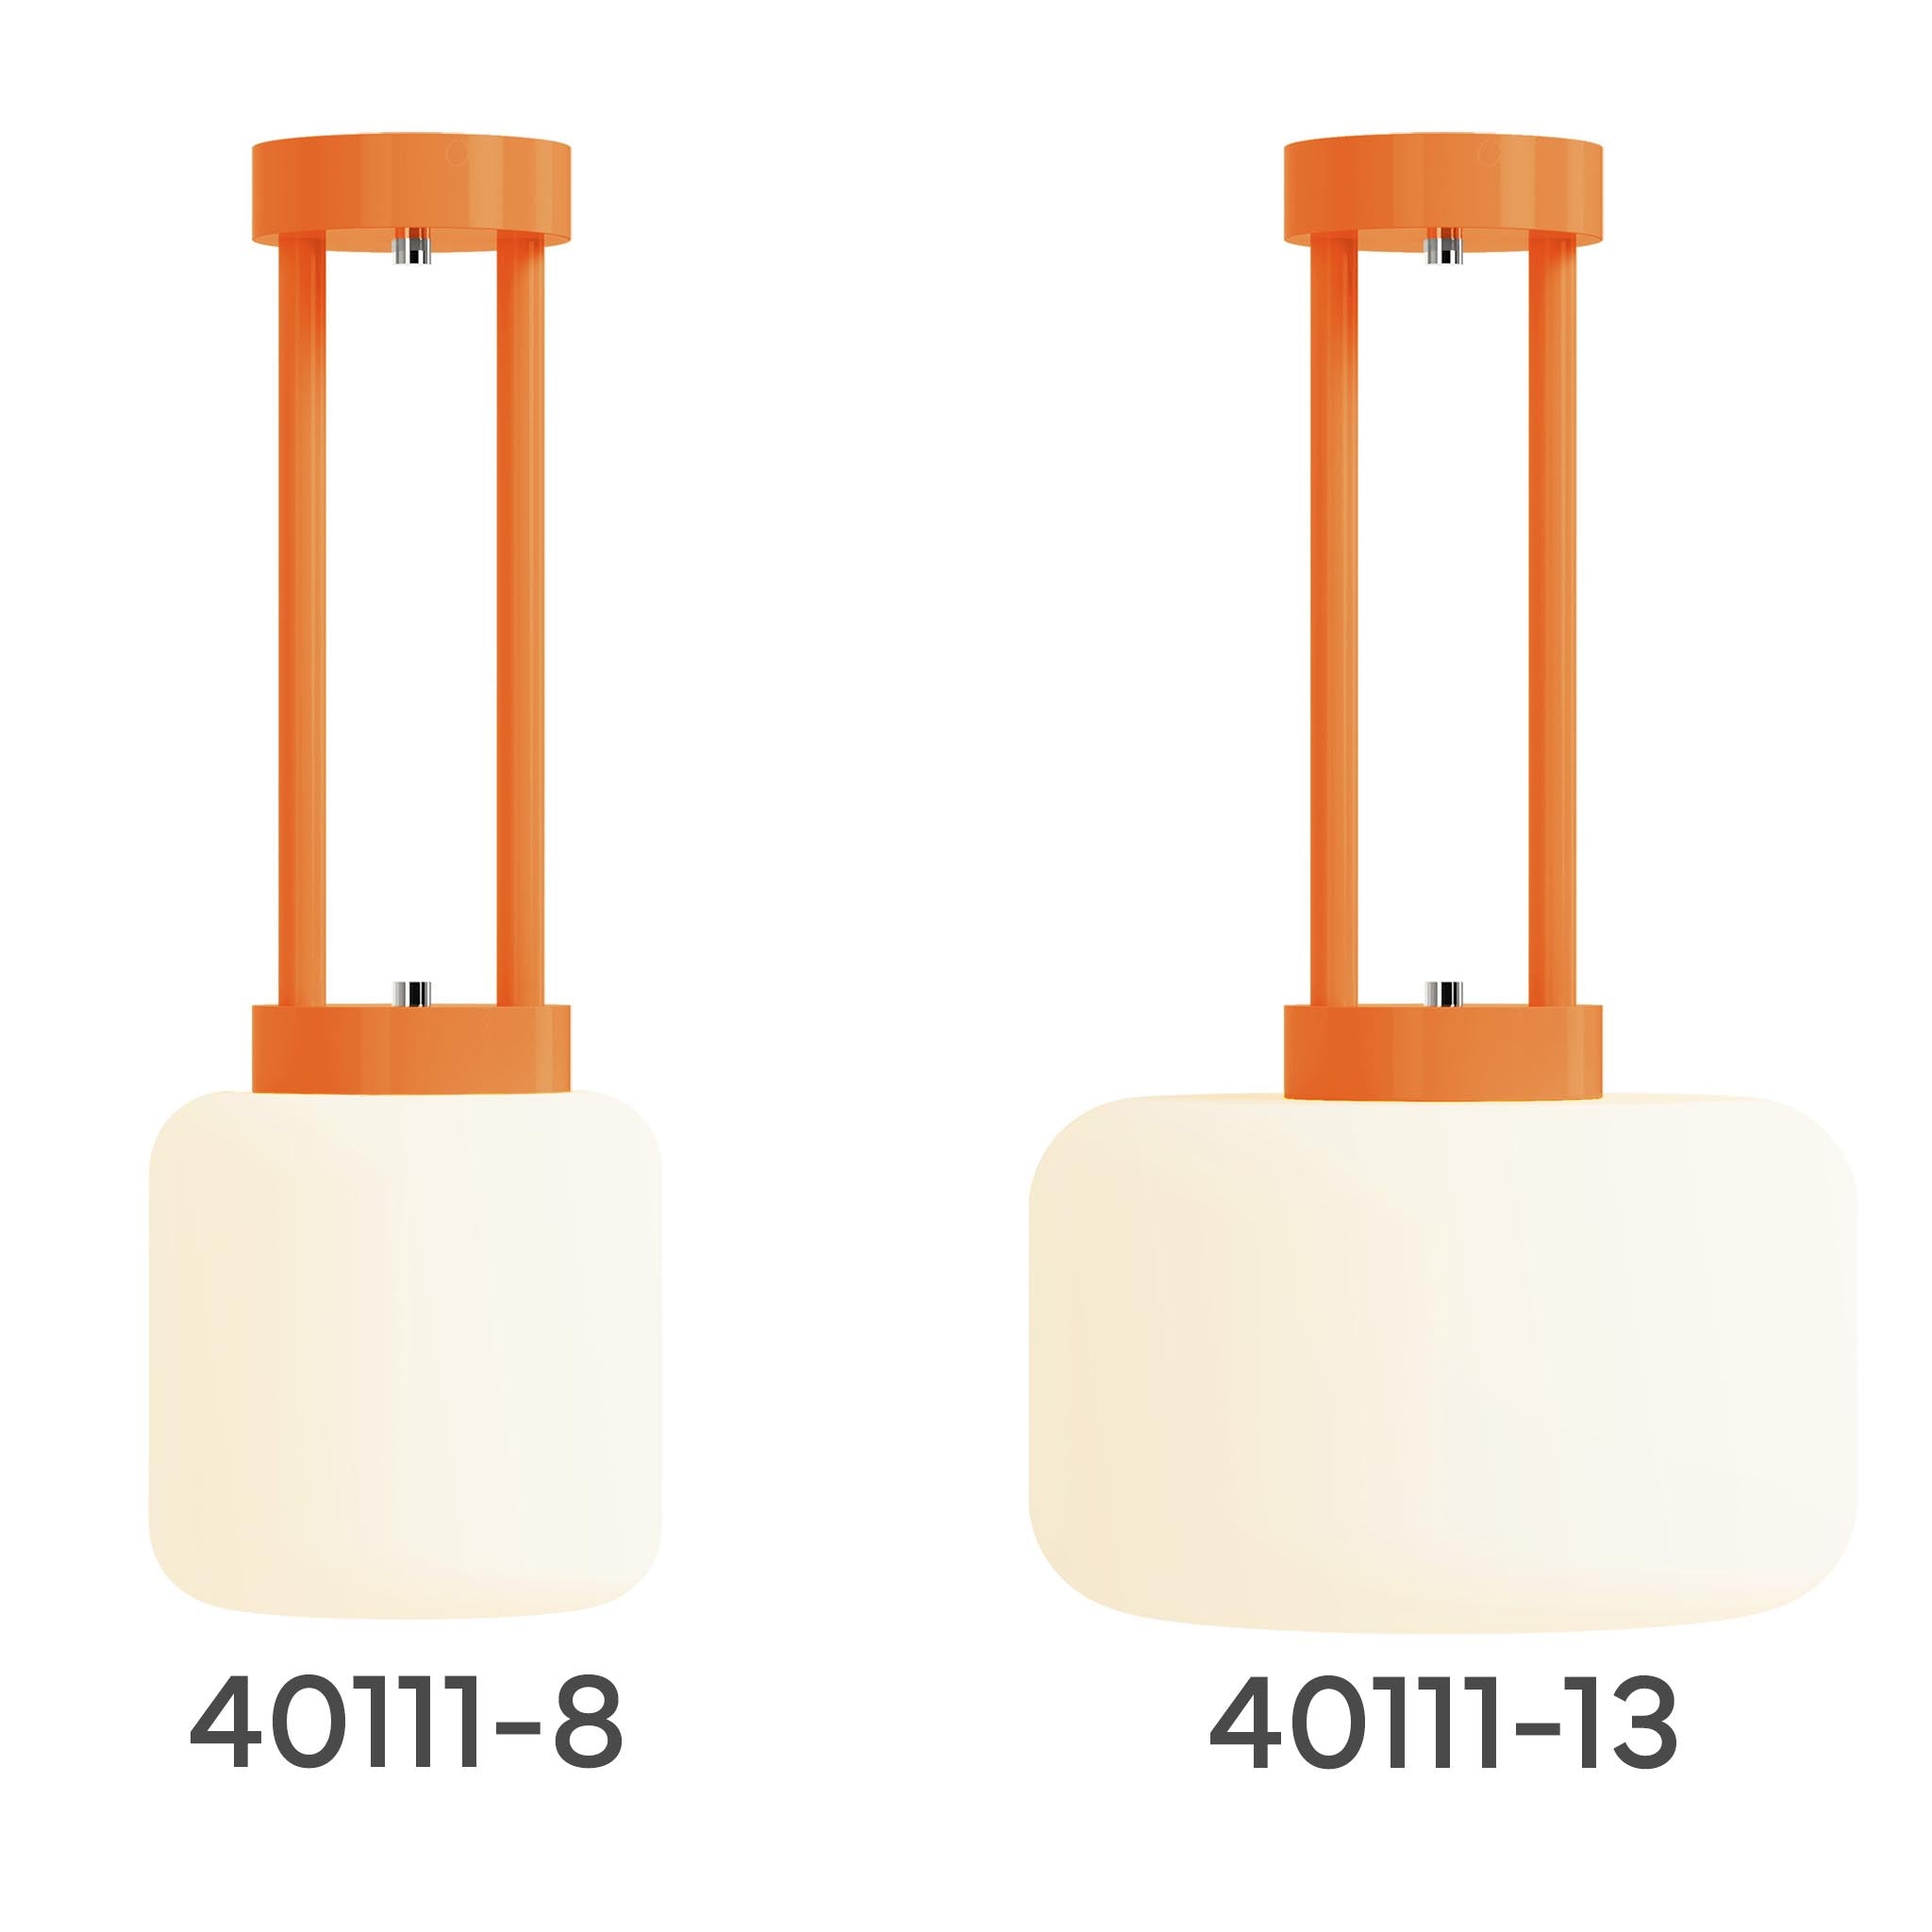 maxo pendant size comparison 8" vs. 13" lighting dutton brown